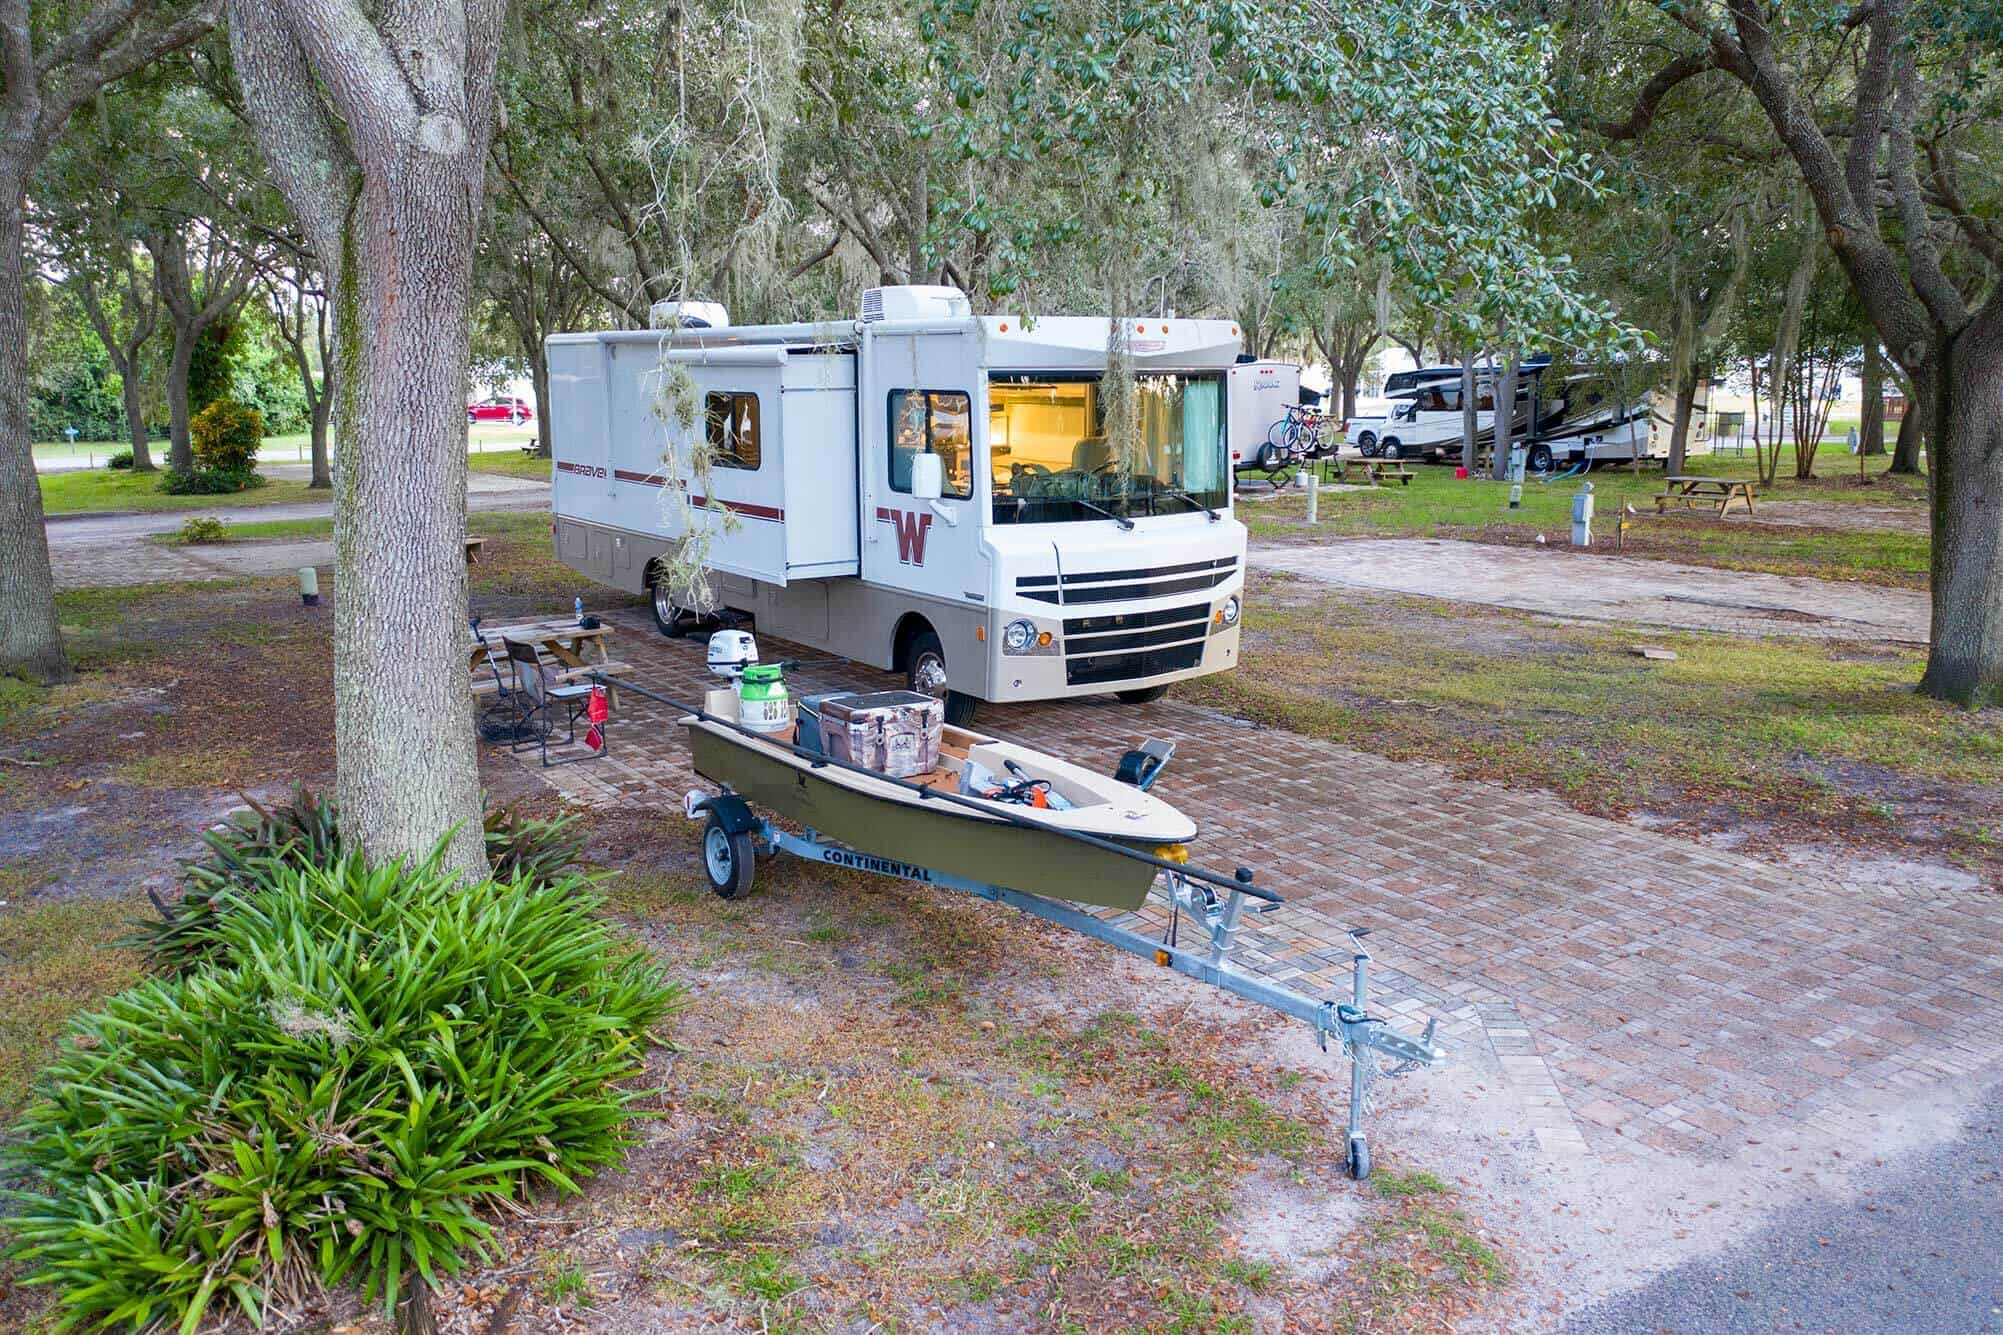 Motorhome and boat under an oak tree at Camp Mack, a Guy Harvey Resort, RV campsite near Lake Wales, FL